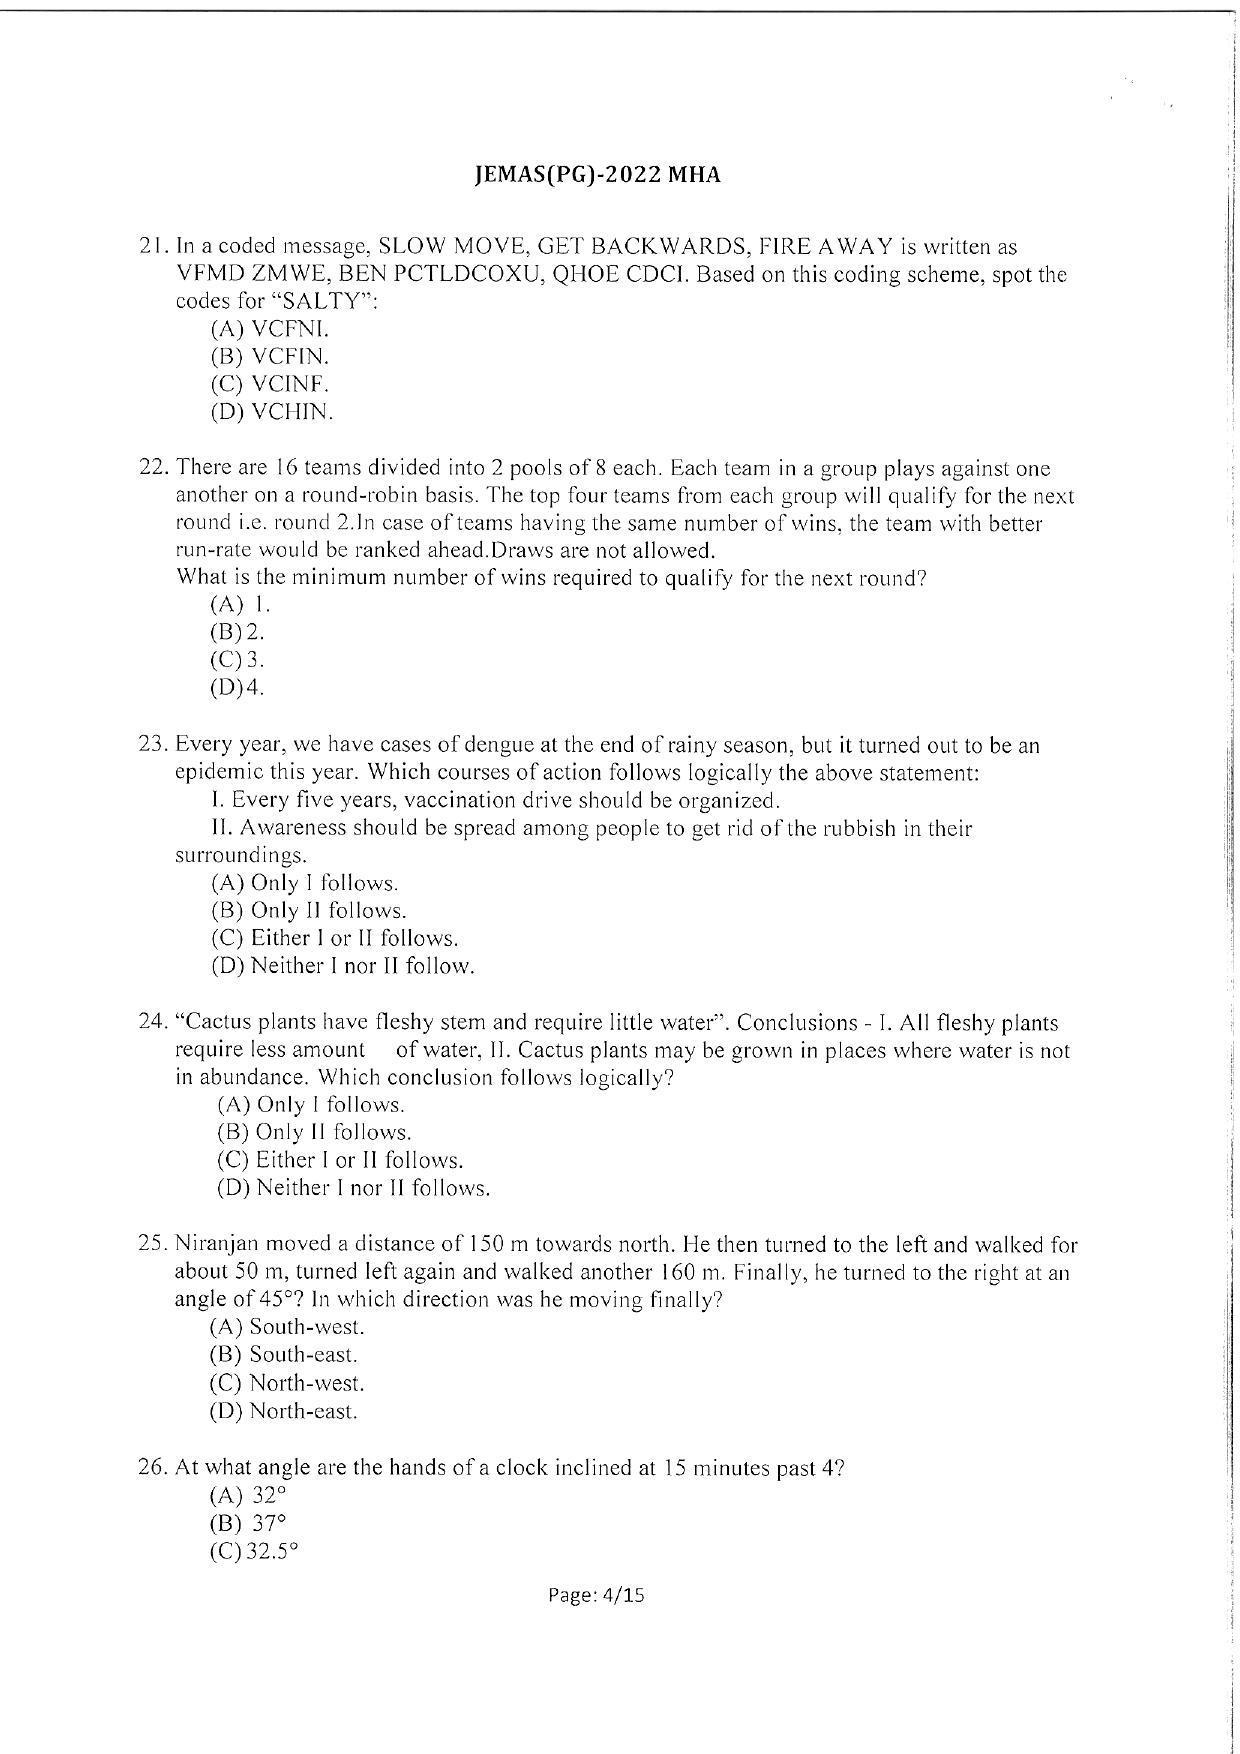 WBJEEB JEMAS (PG) 2022 MHA Question Paper - Page 6